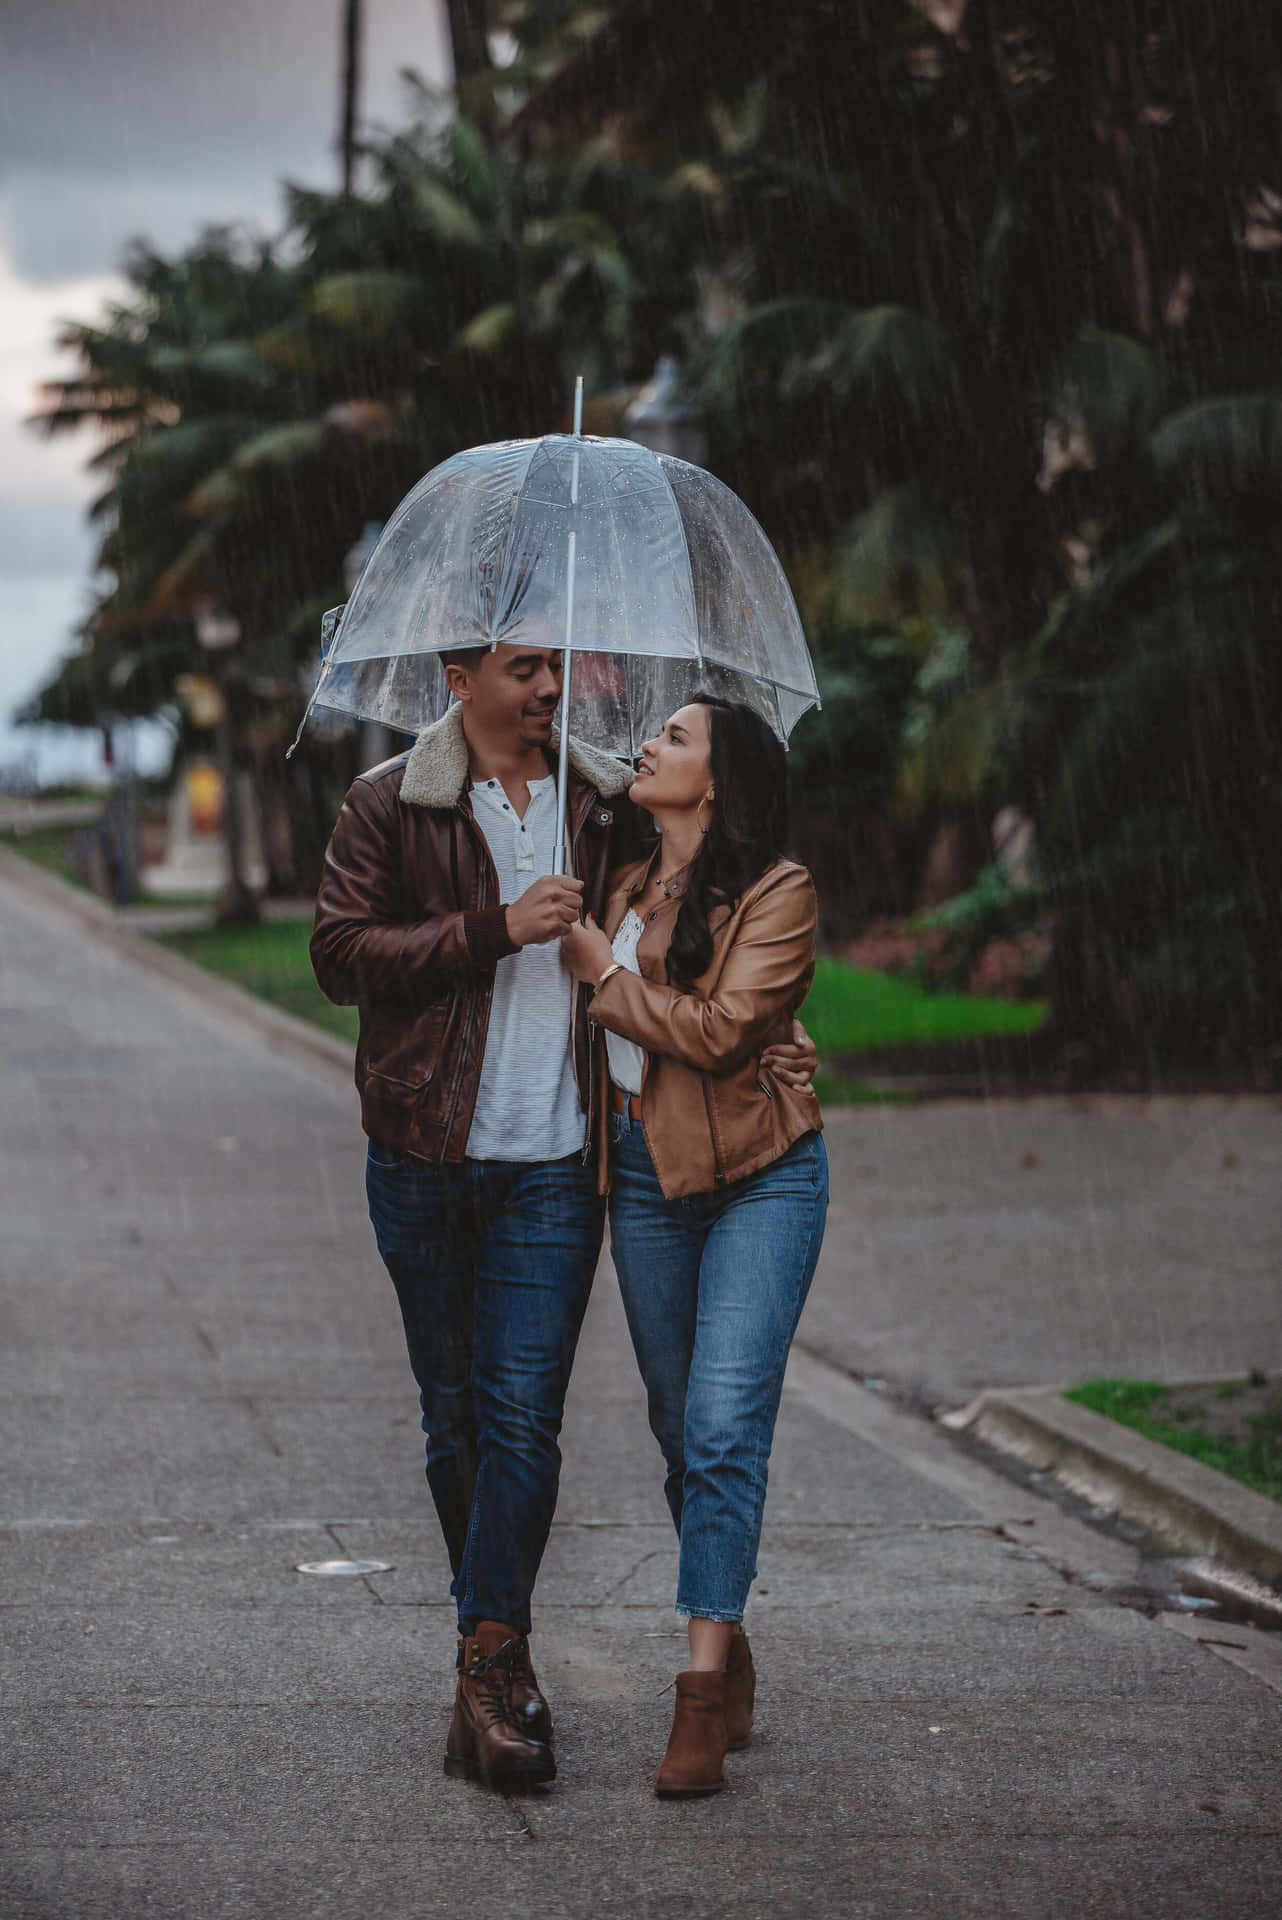 Love in the Rain